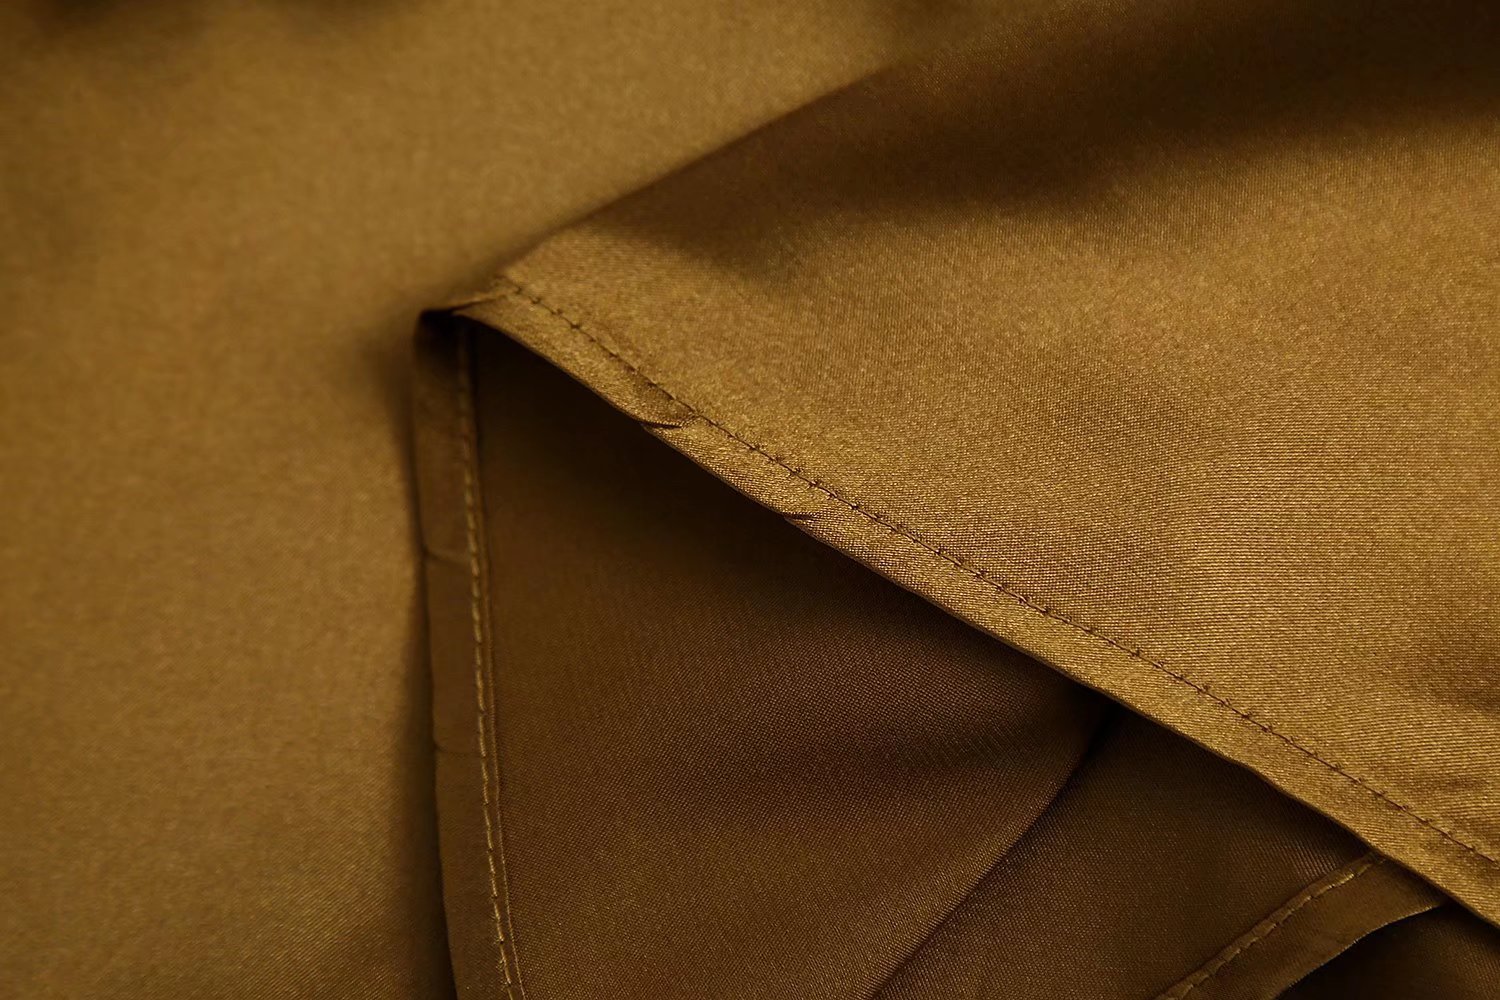 Silk Satin Texture V Neck Pleated Shirt Dress NSAM110527